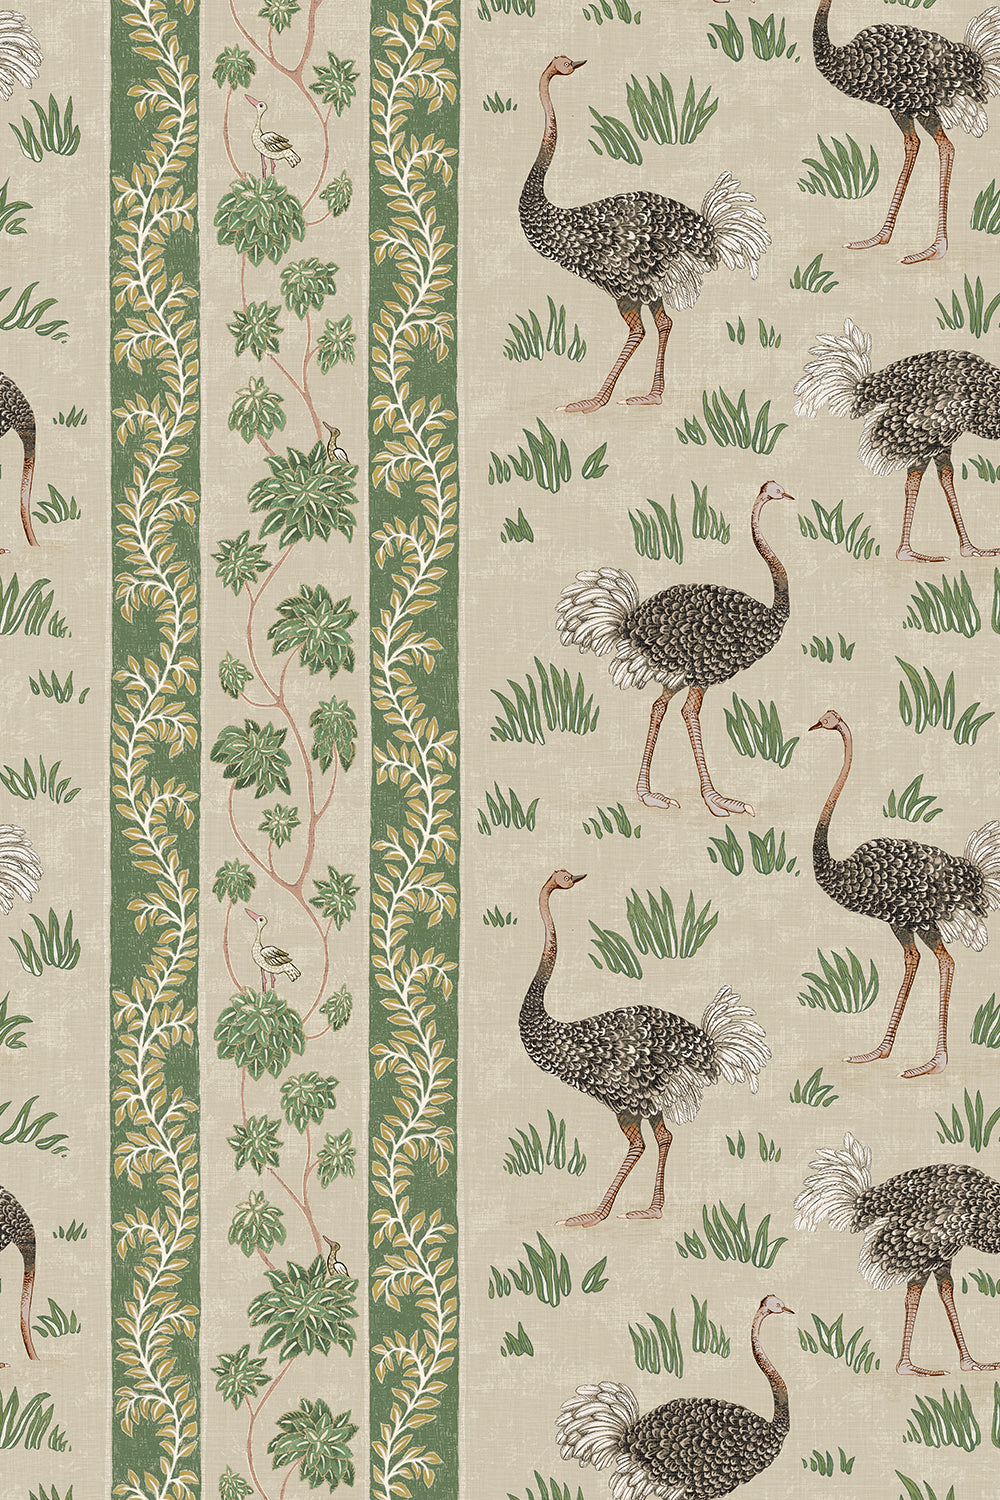 Josephine-Munsey-wallpaper-Ostrich-stripe-wallpaper-birds-amongst-grass-stripe-background-cream-and-green